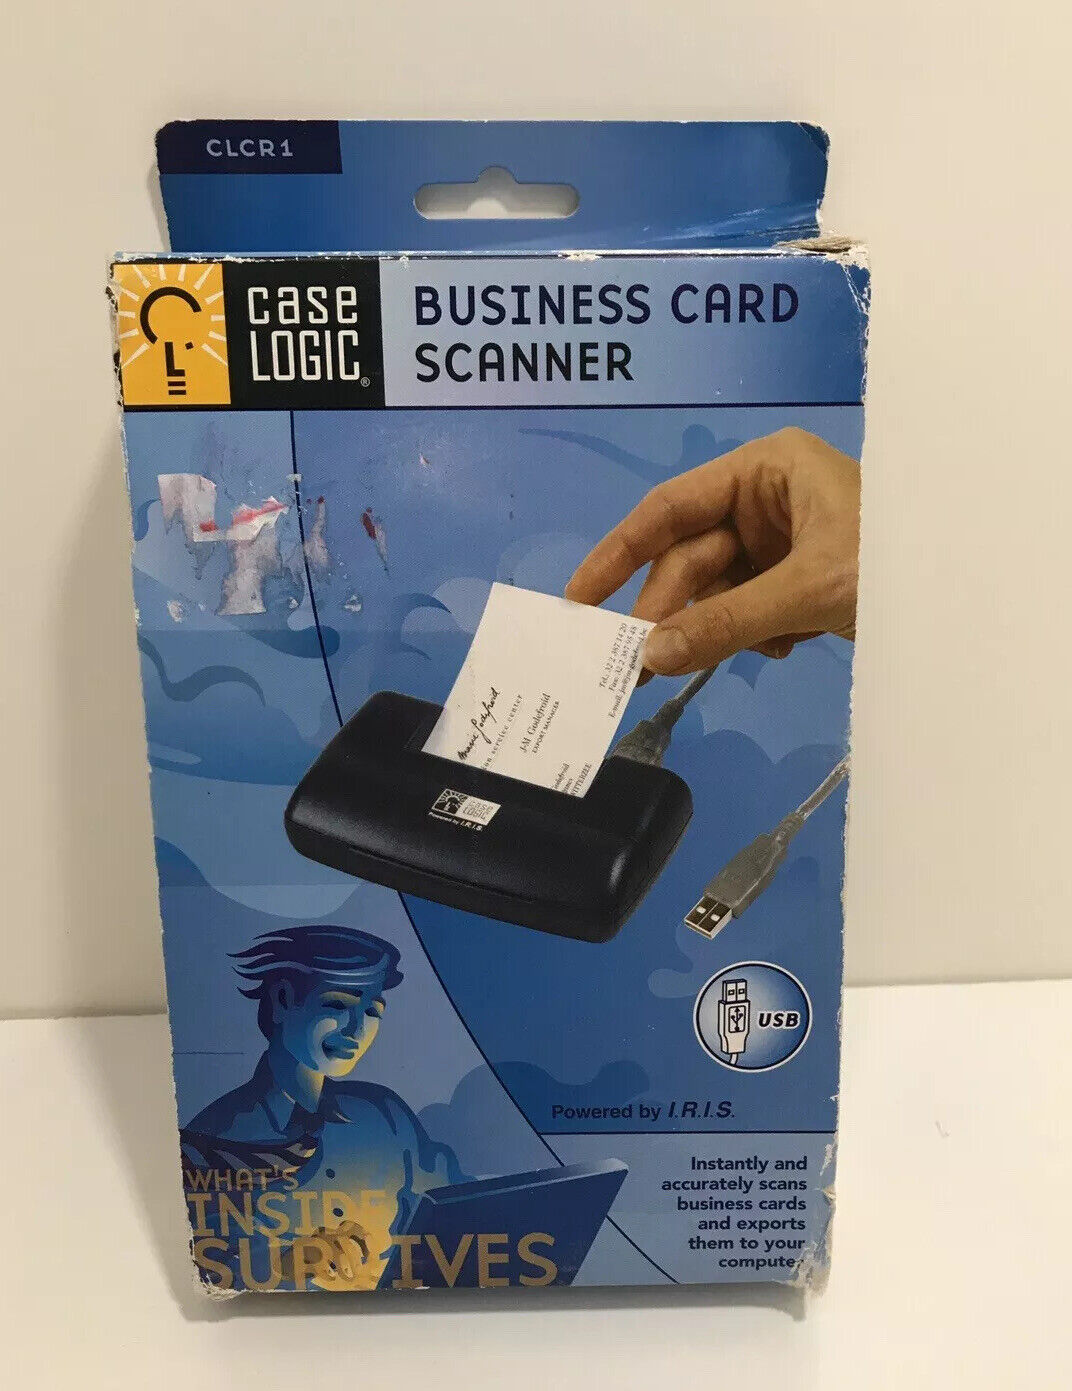 Case Logic Business Card Scanner CLCR1 New In Box Very Rare Find